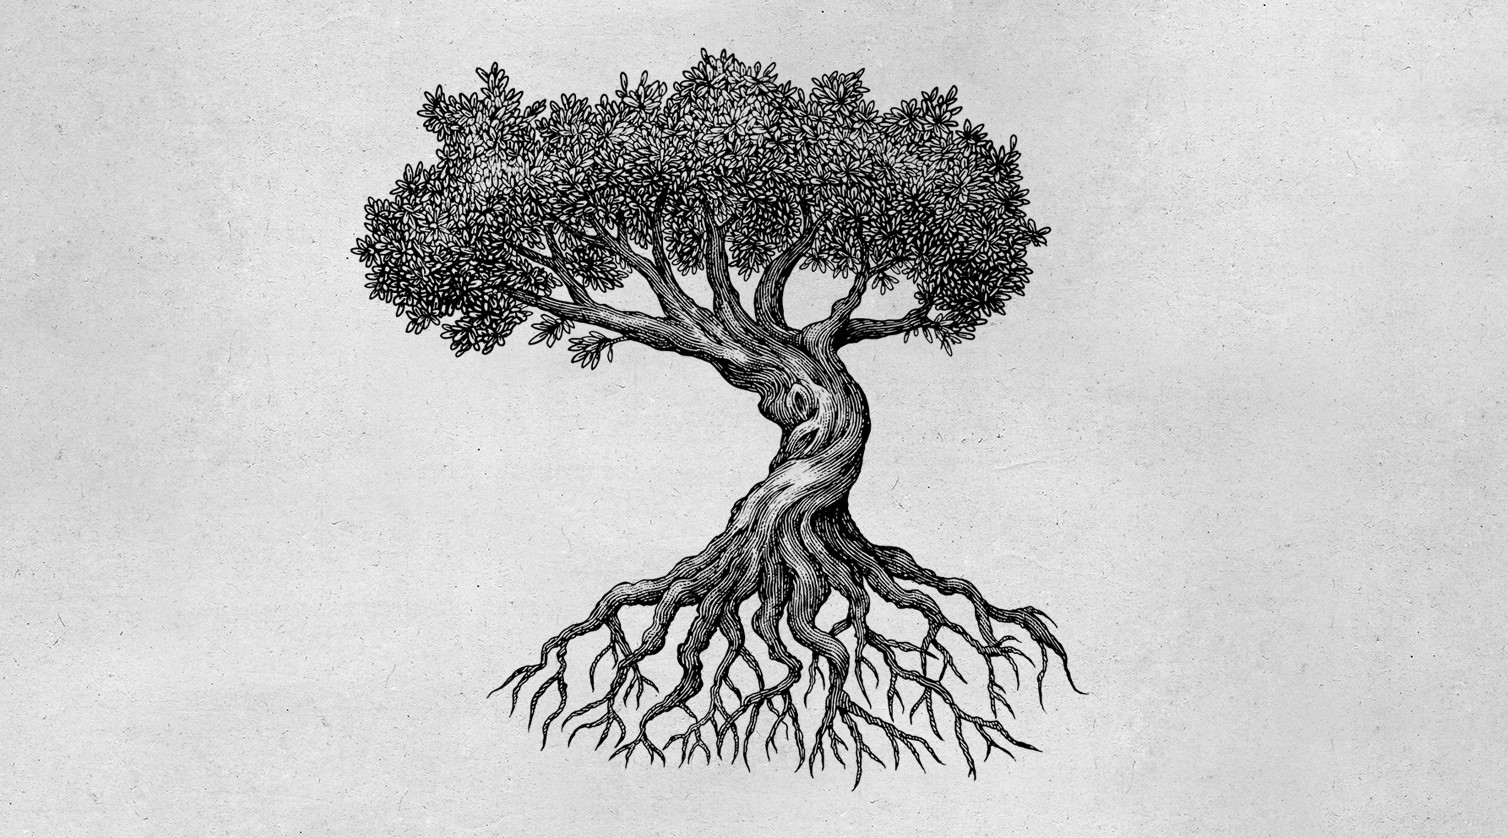 Tree Image